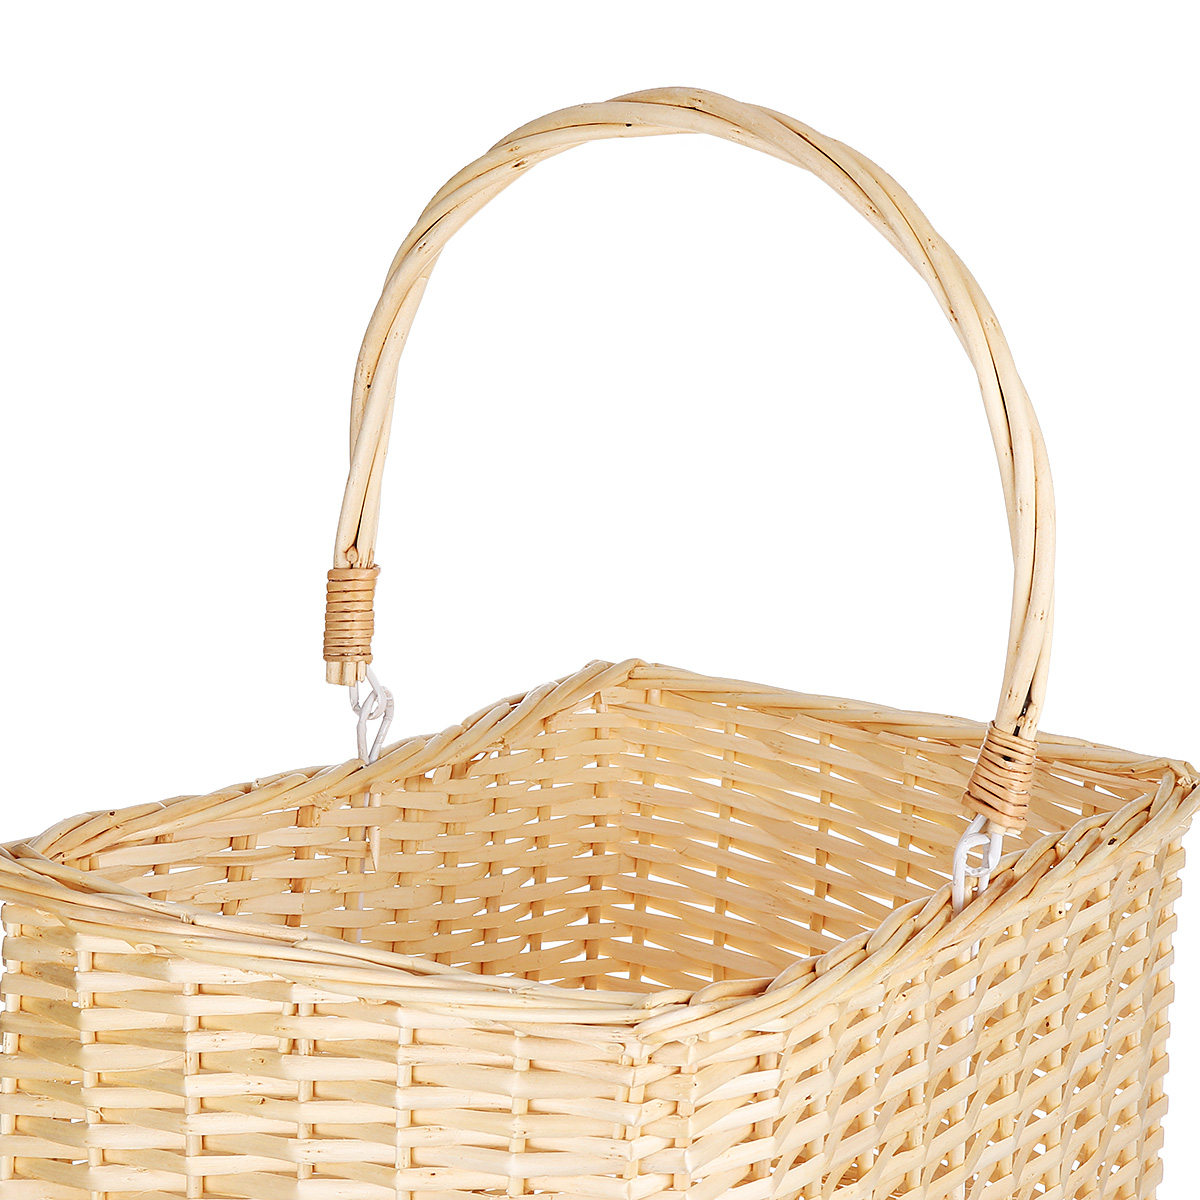 Willow-Woven-Basket-Box-Seagrass-Storage-Hamper-Laundry-Holder-Home-Organizer-1688975-8